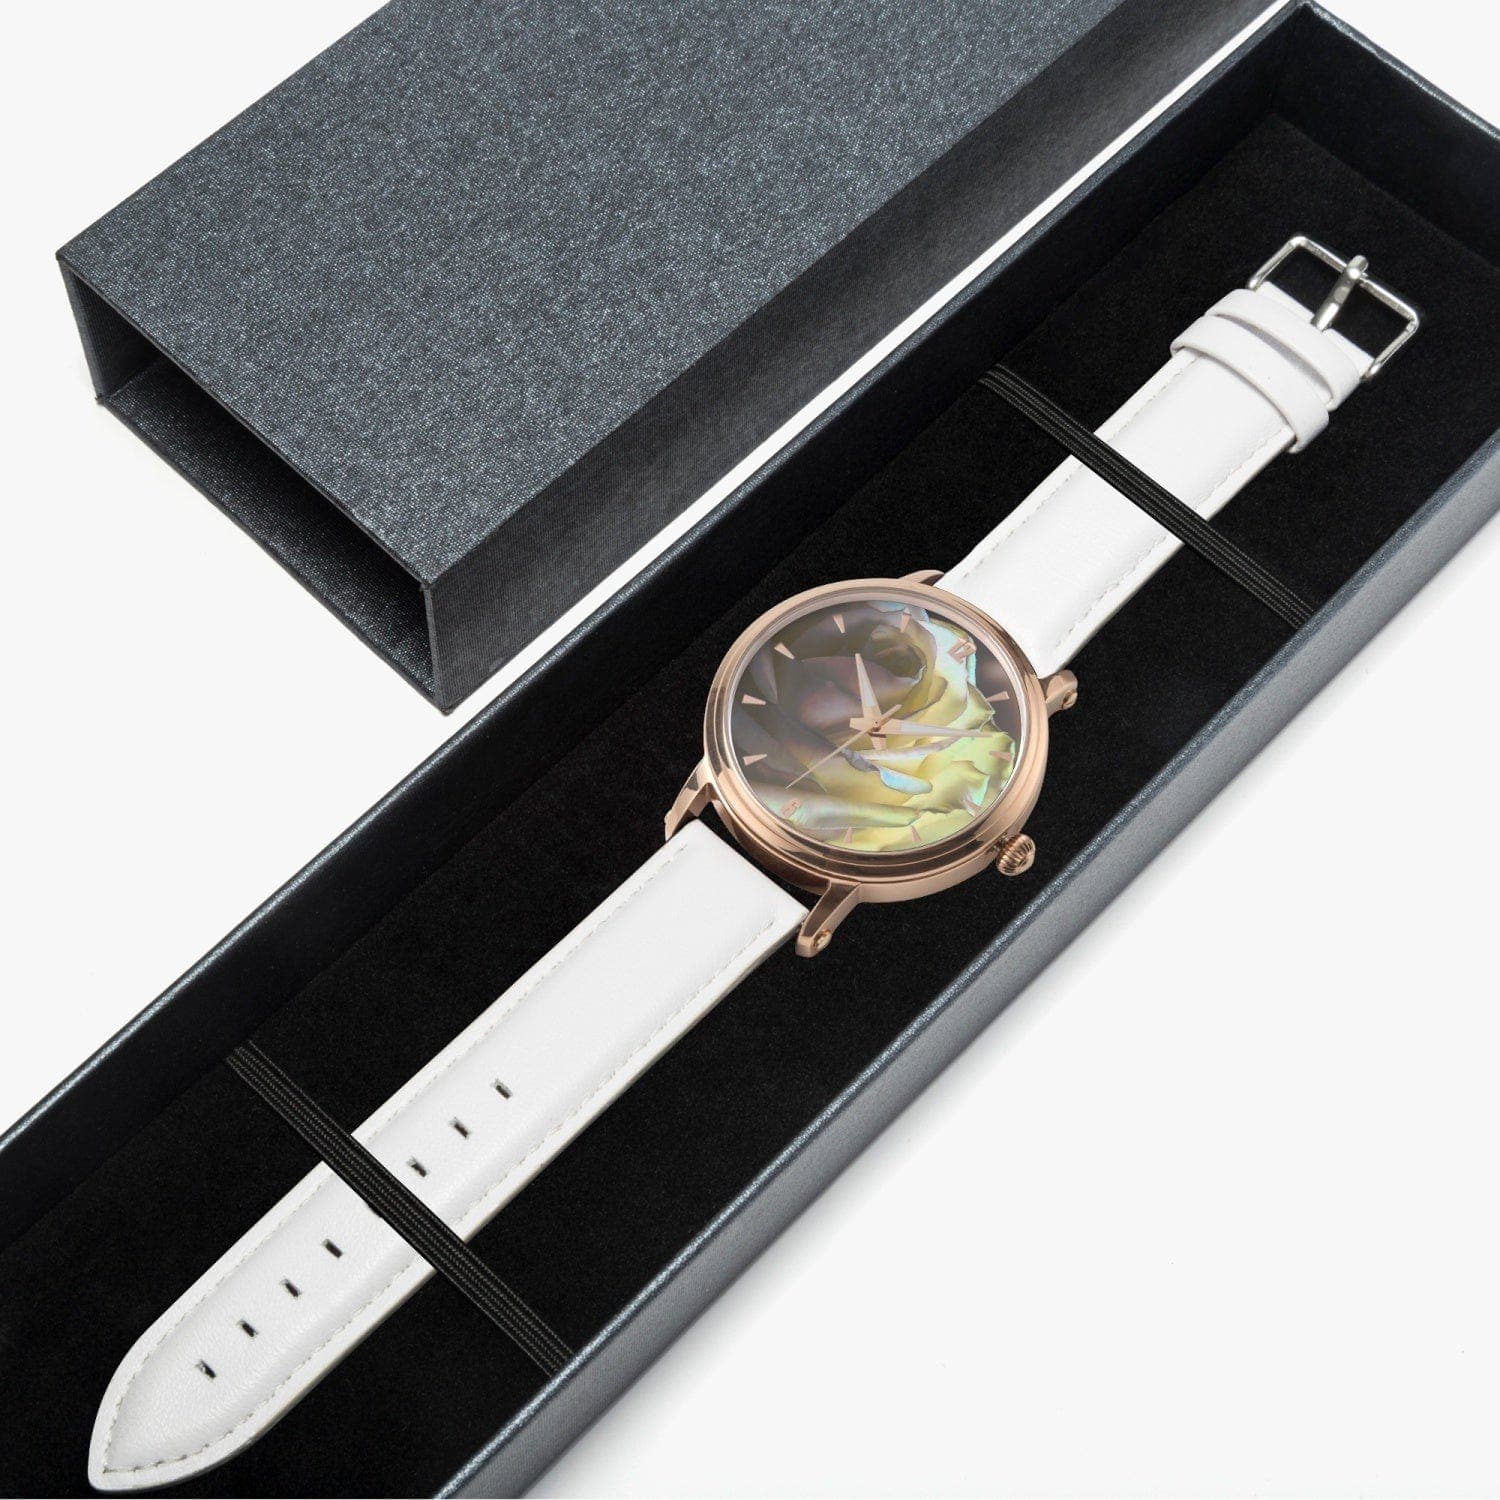 Shy white rose, designer 46mm Unisex Automatic Watch (Rose Gold), designed by Sensus Studio